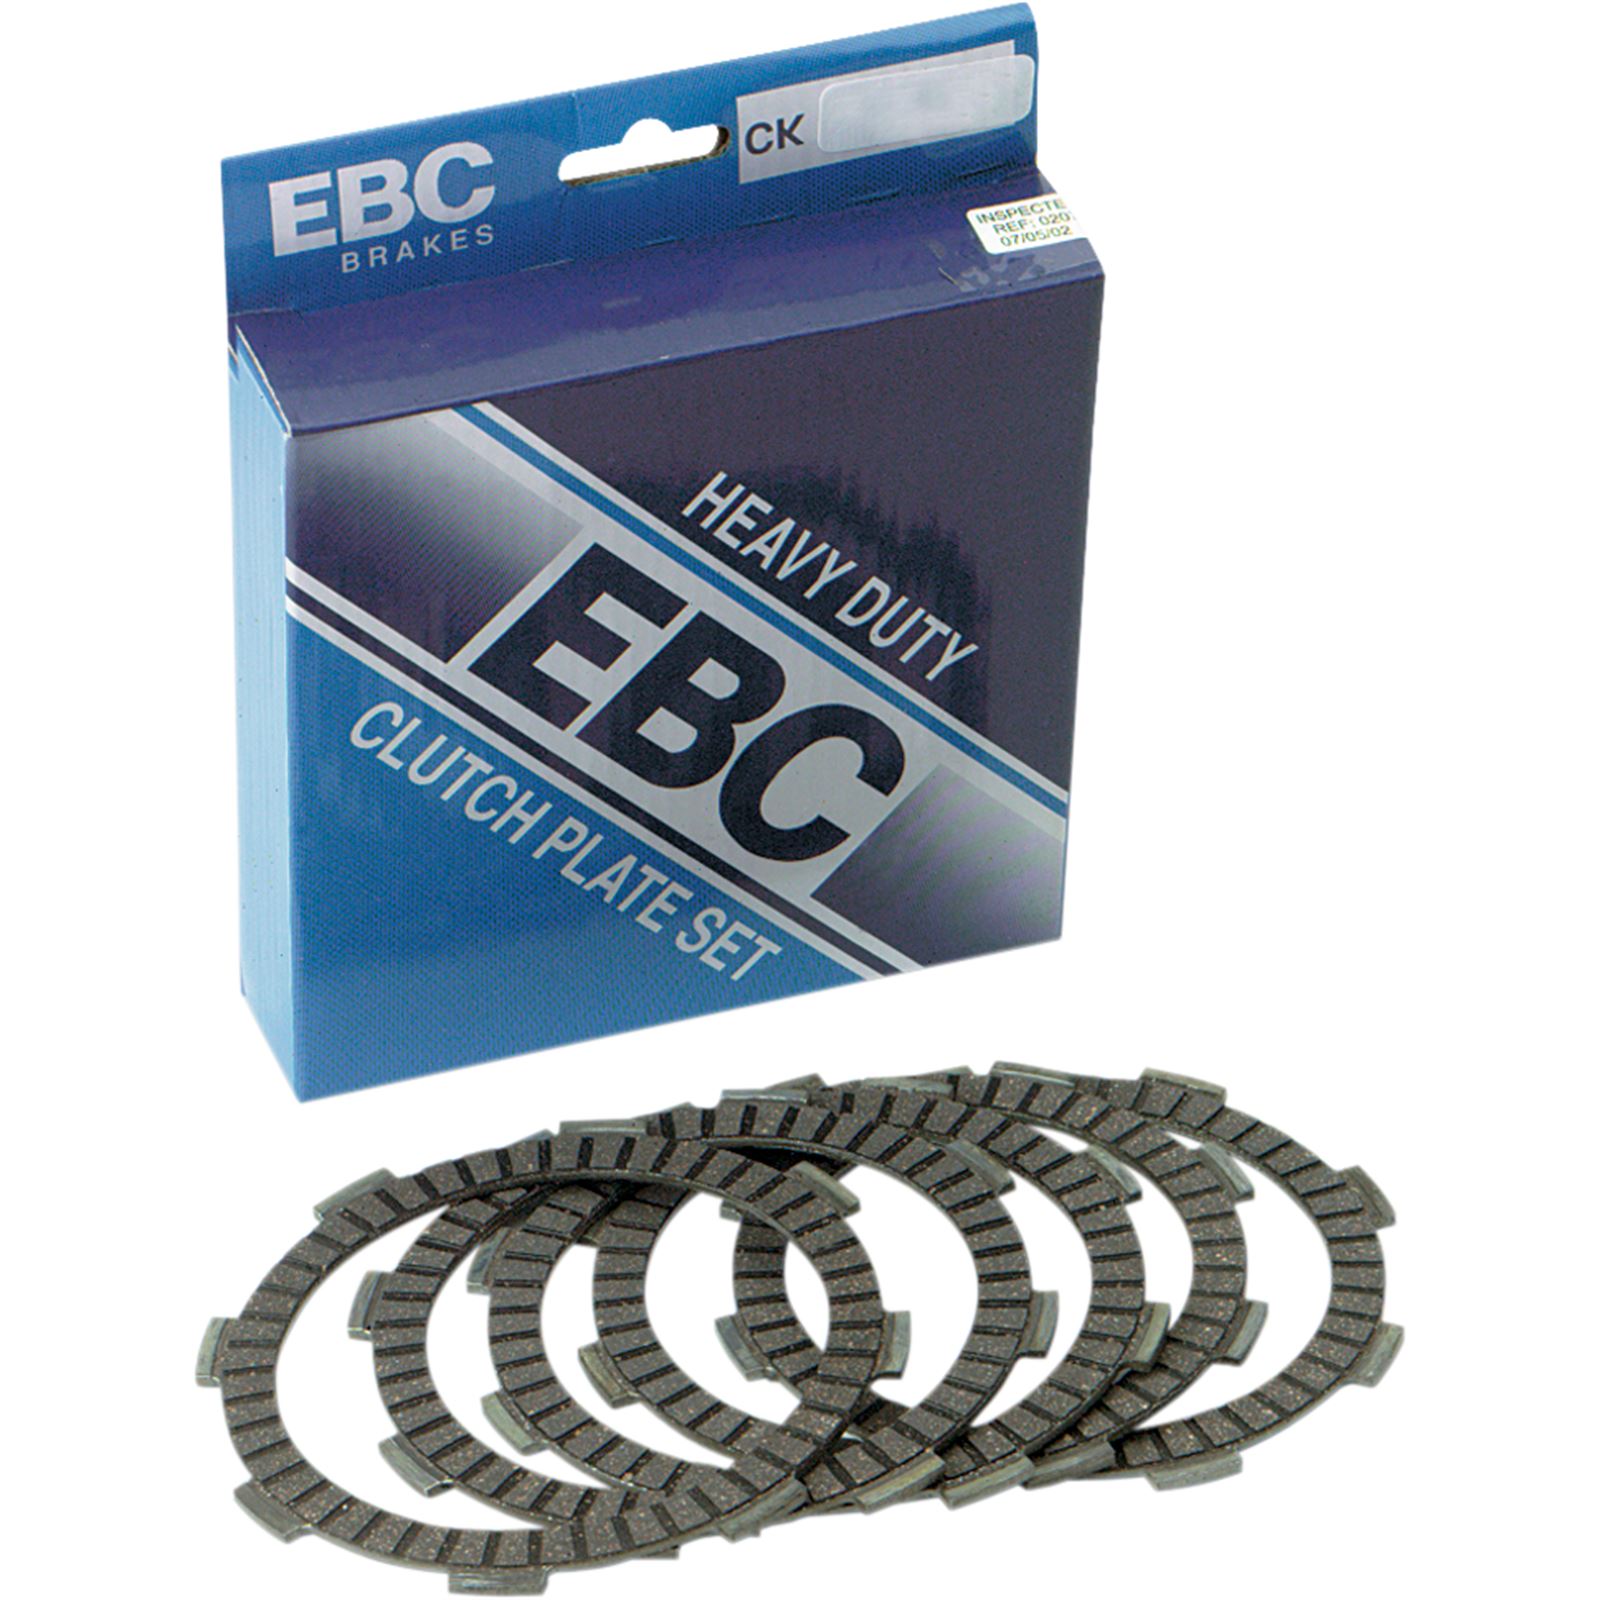 EBC Brakes CK2355 Clutch Friction Plate Kit